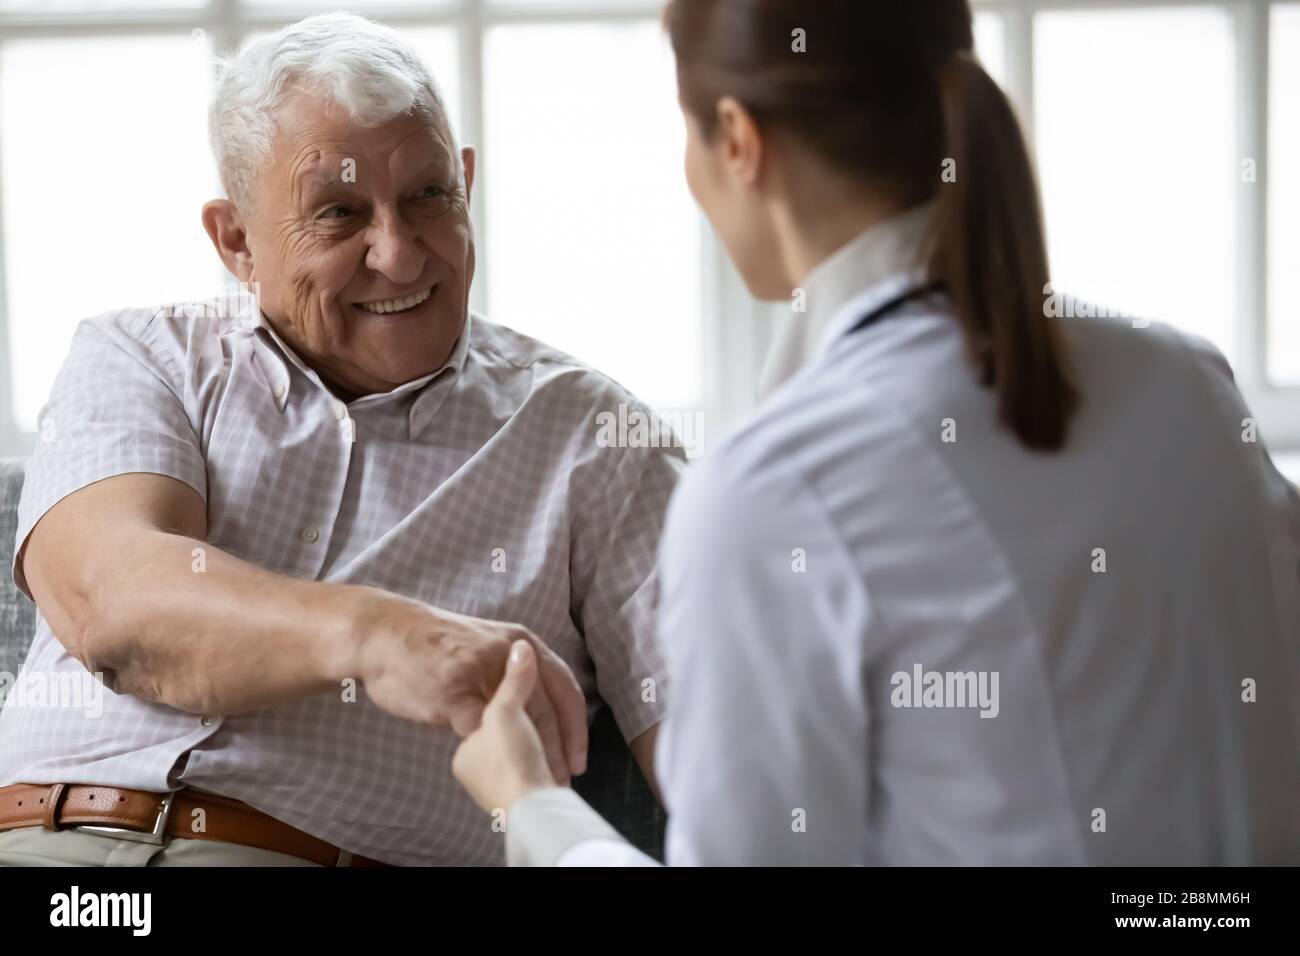 Nurse in uniform talking during day visit to elderly patient Stock Photo